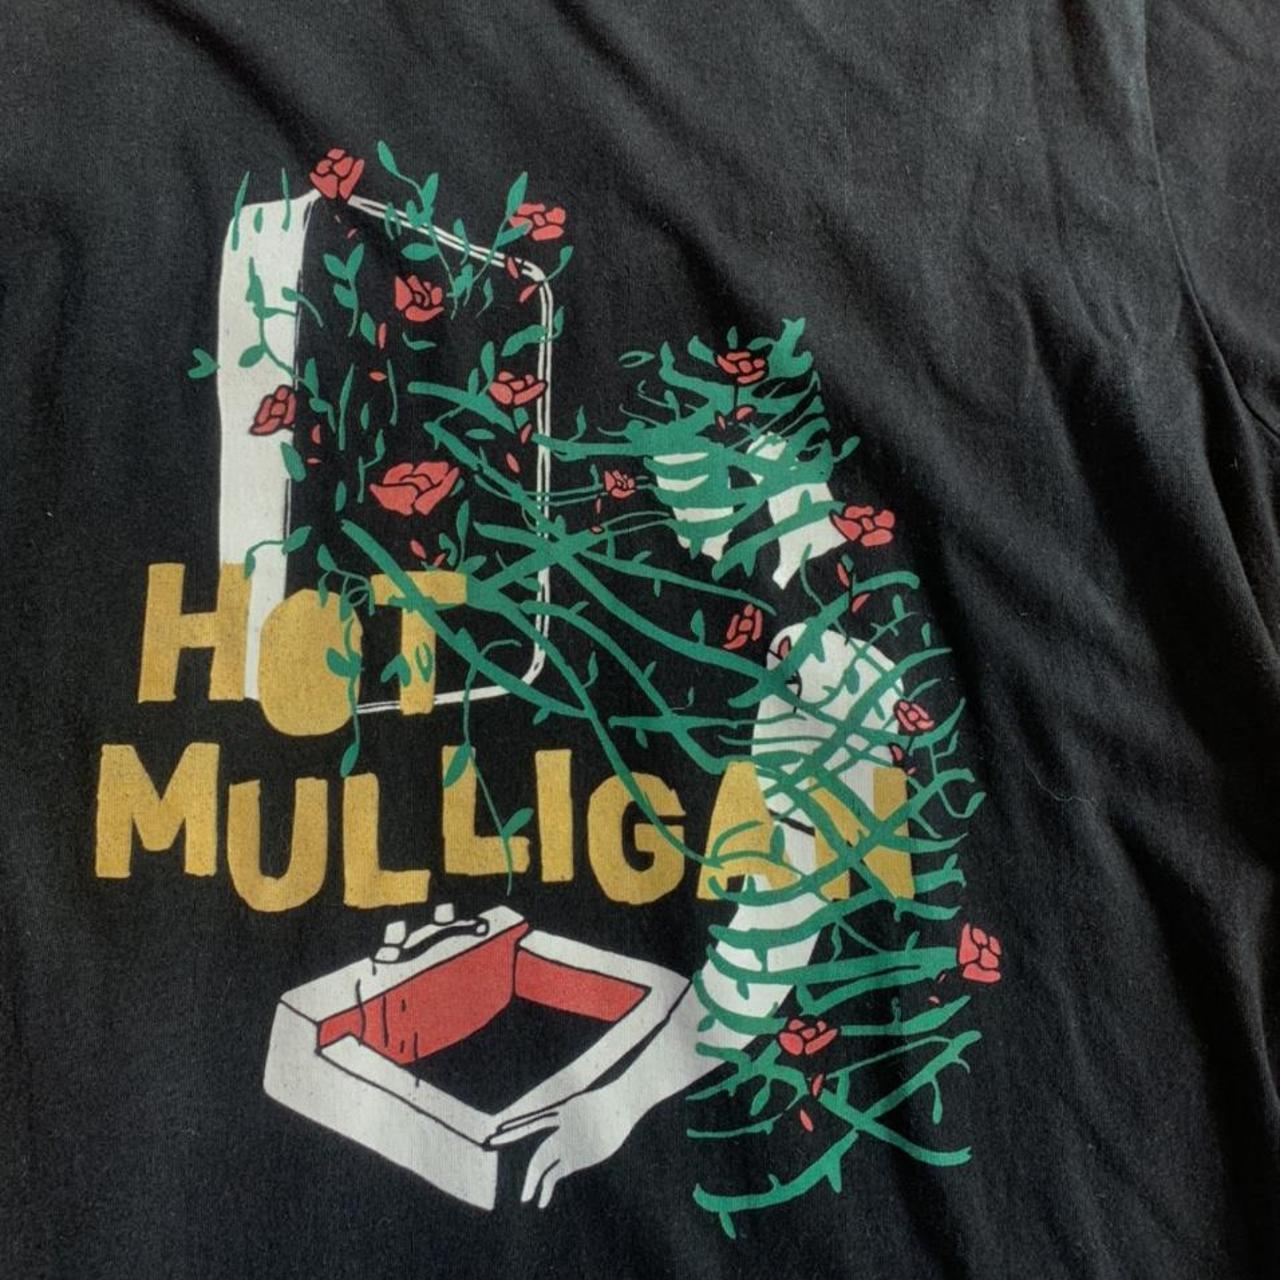 Product Image 1 - Hot mulligan shirt. Women’s medium


Tags: